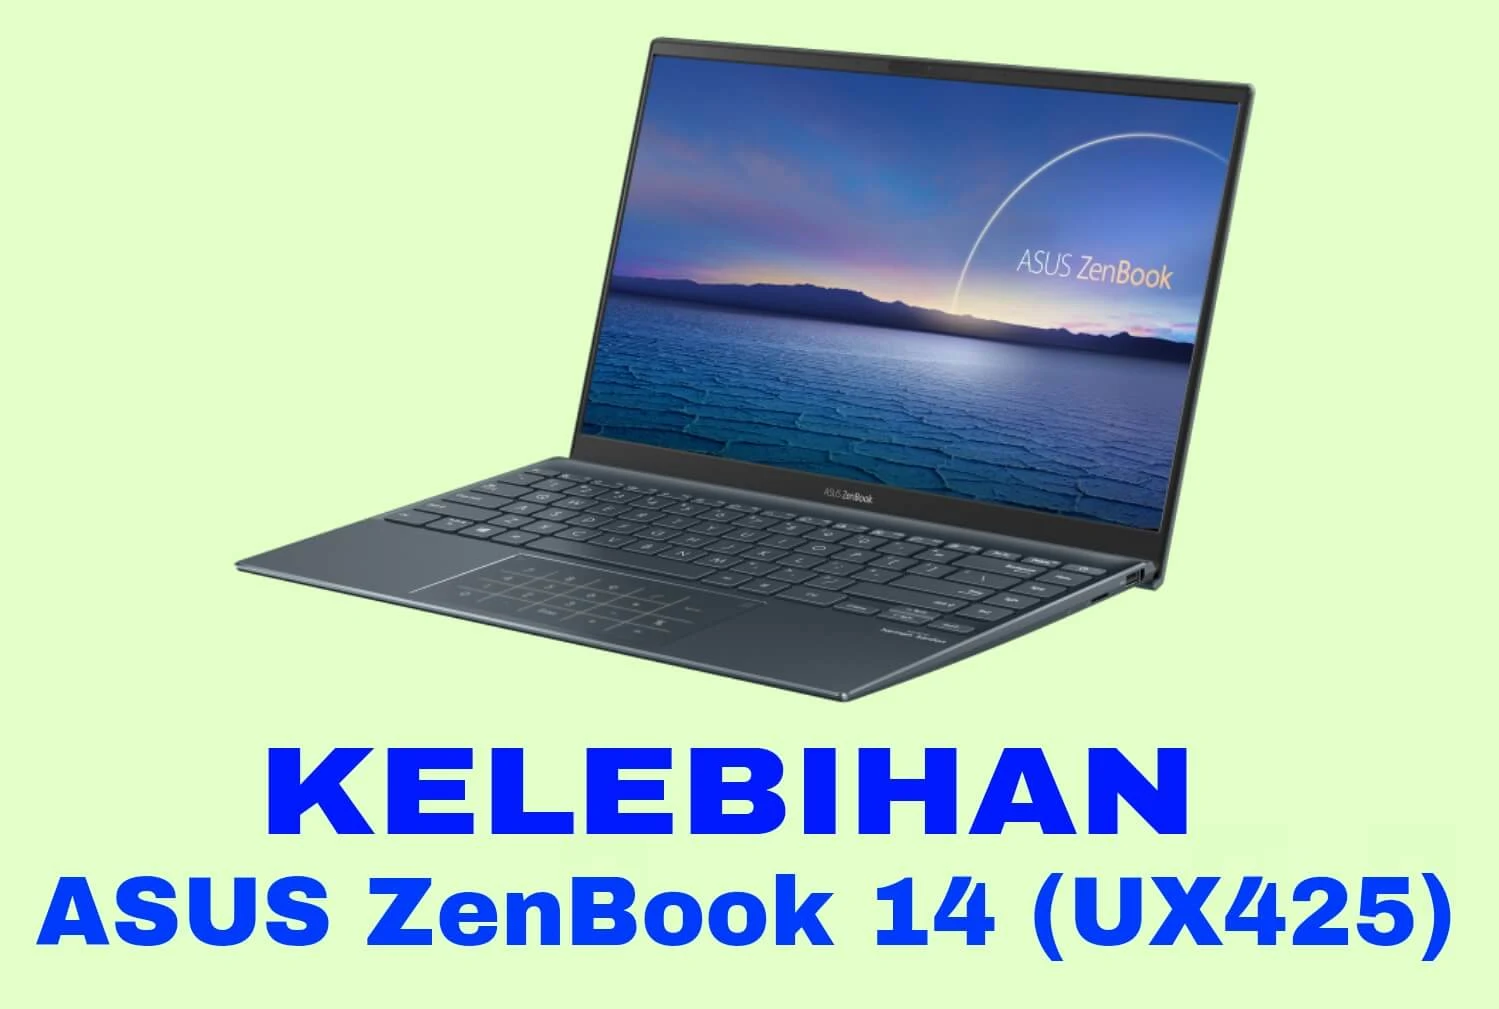 Kelebihan ASUS ZenBook 14 UX425